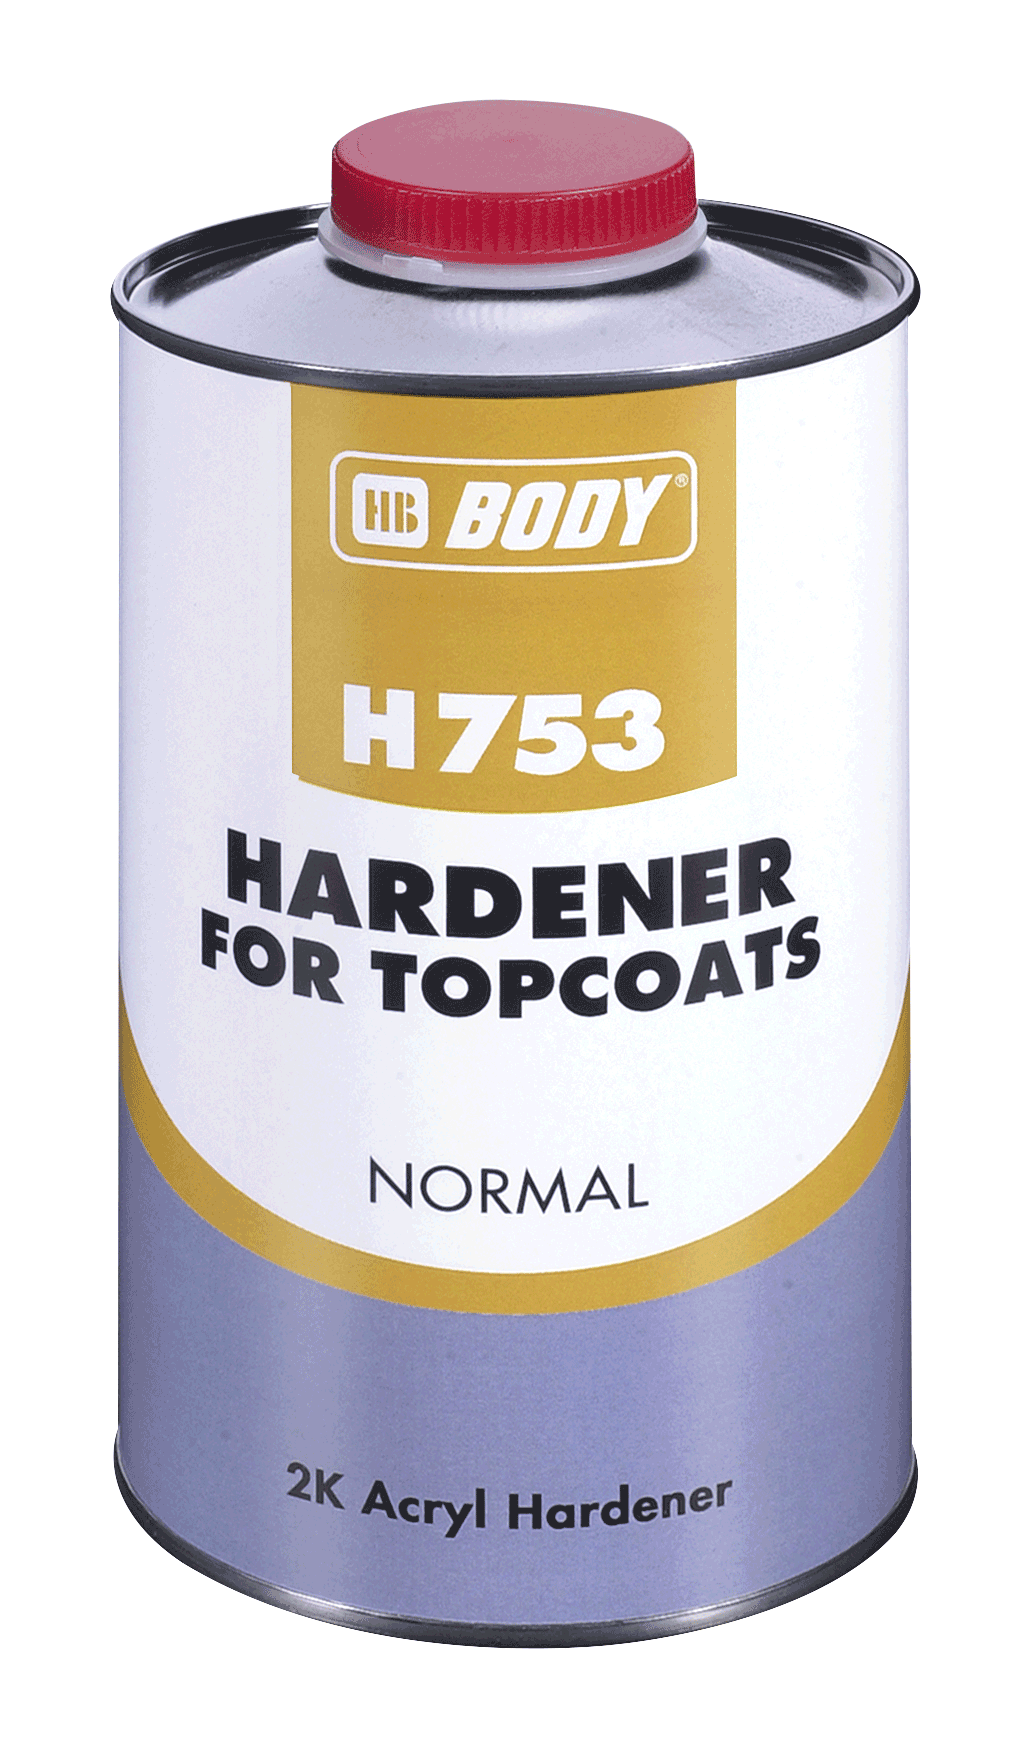 HB BODY Body 753 Hardener normal 250ml